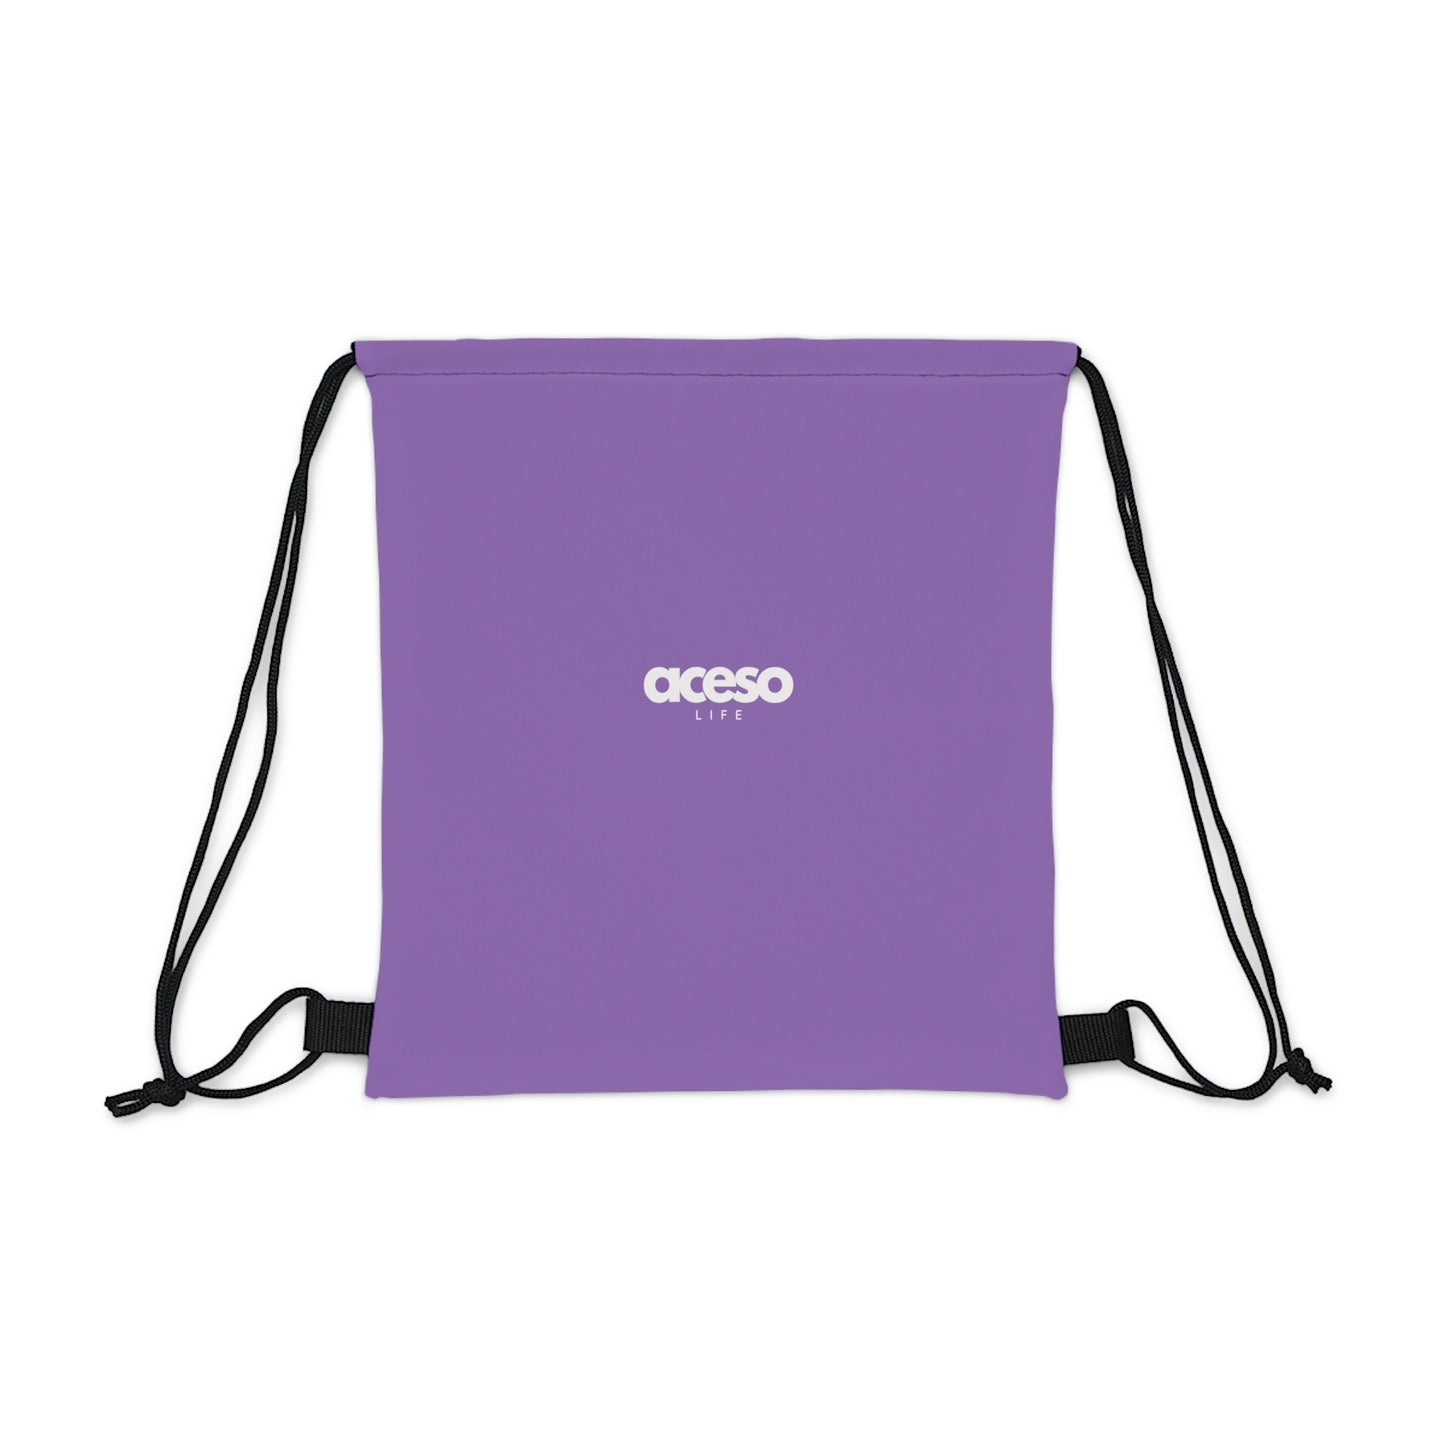 Drawstring Bag [Light Purple]